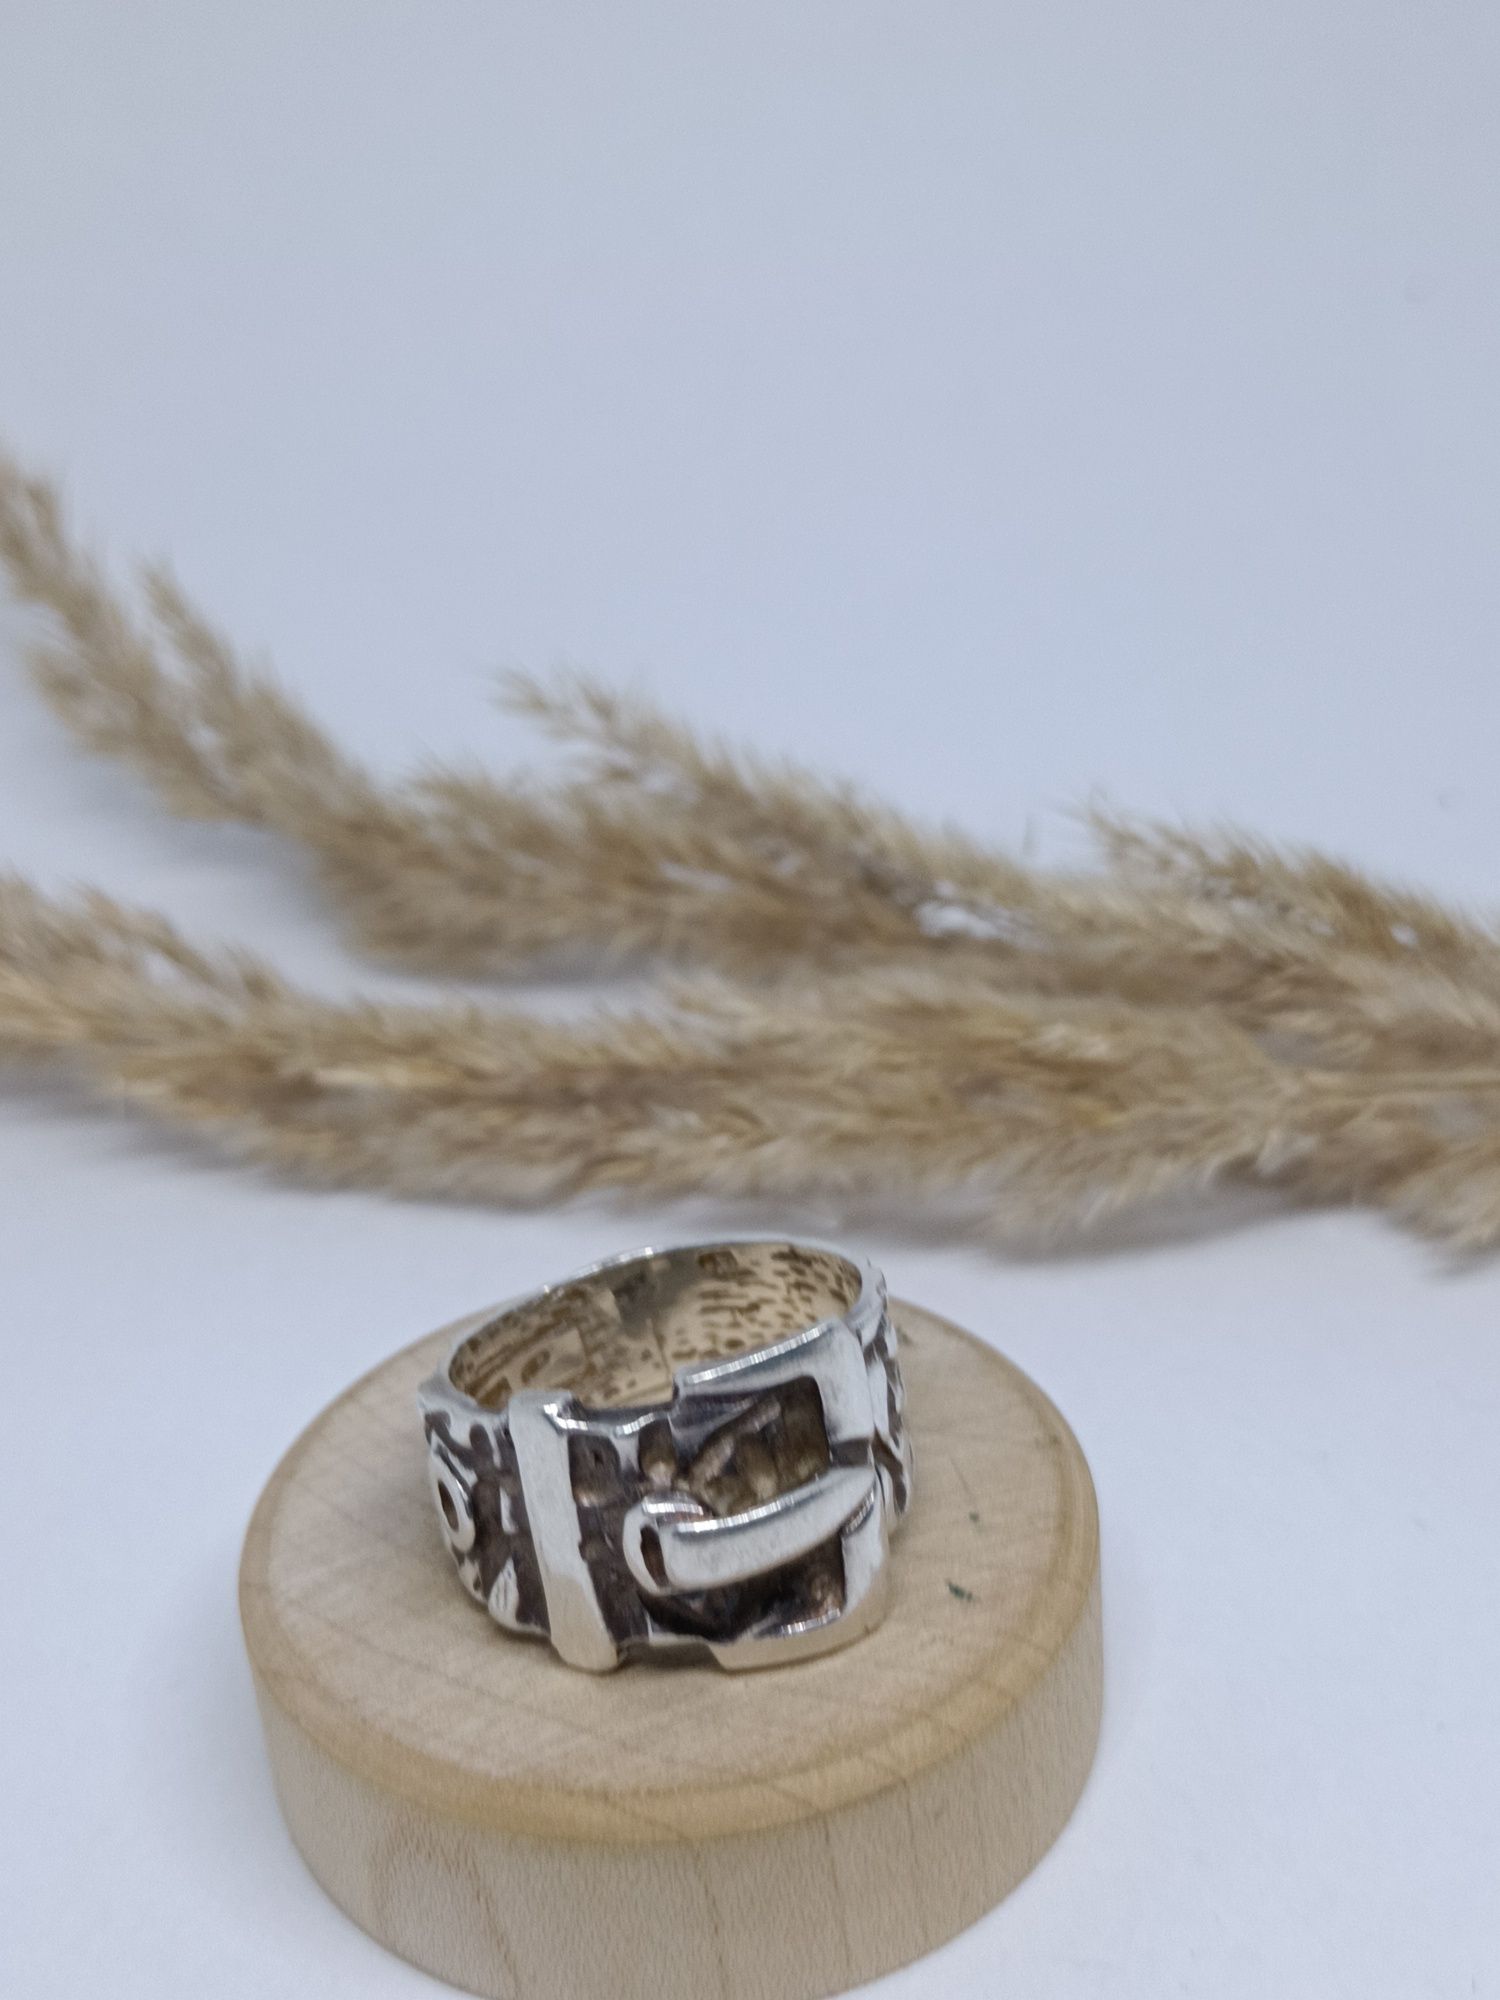 Unikatowy pierścionek pasek ze srebra, srebro 925